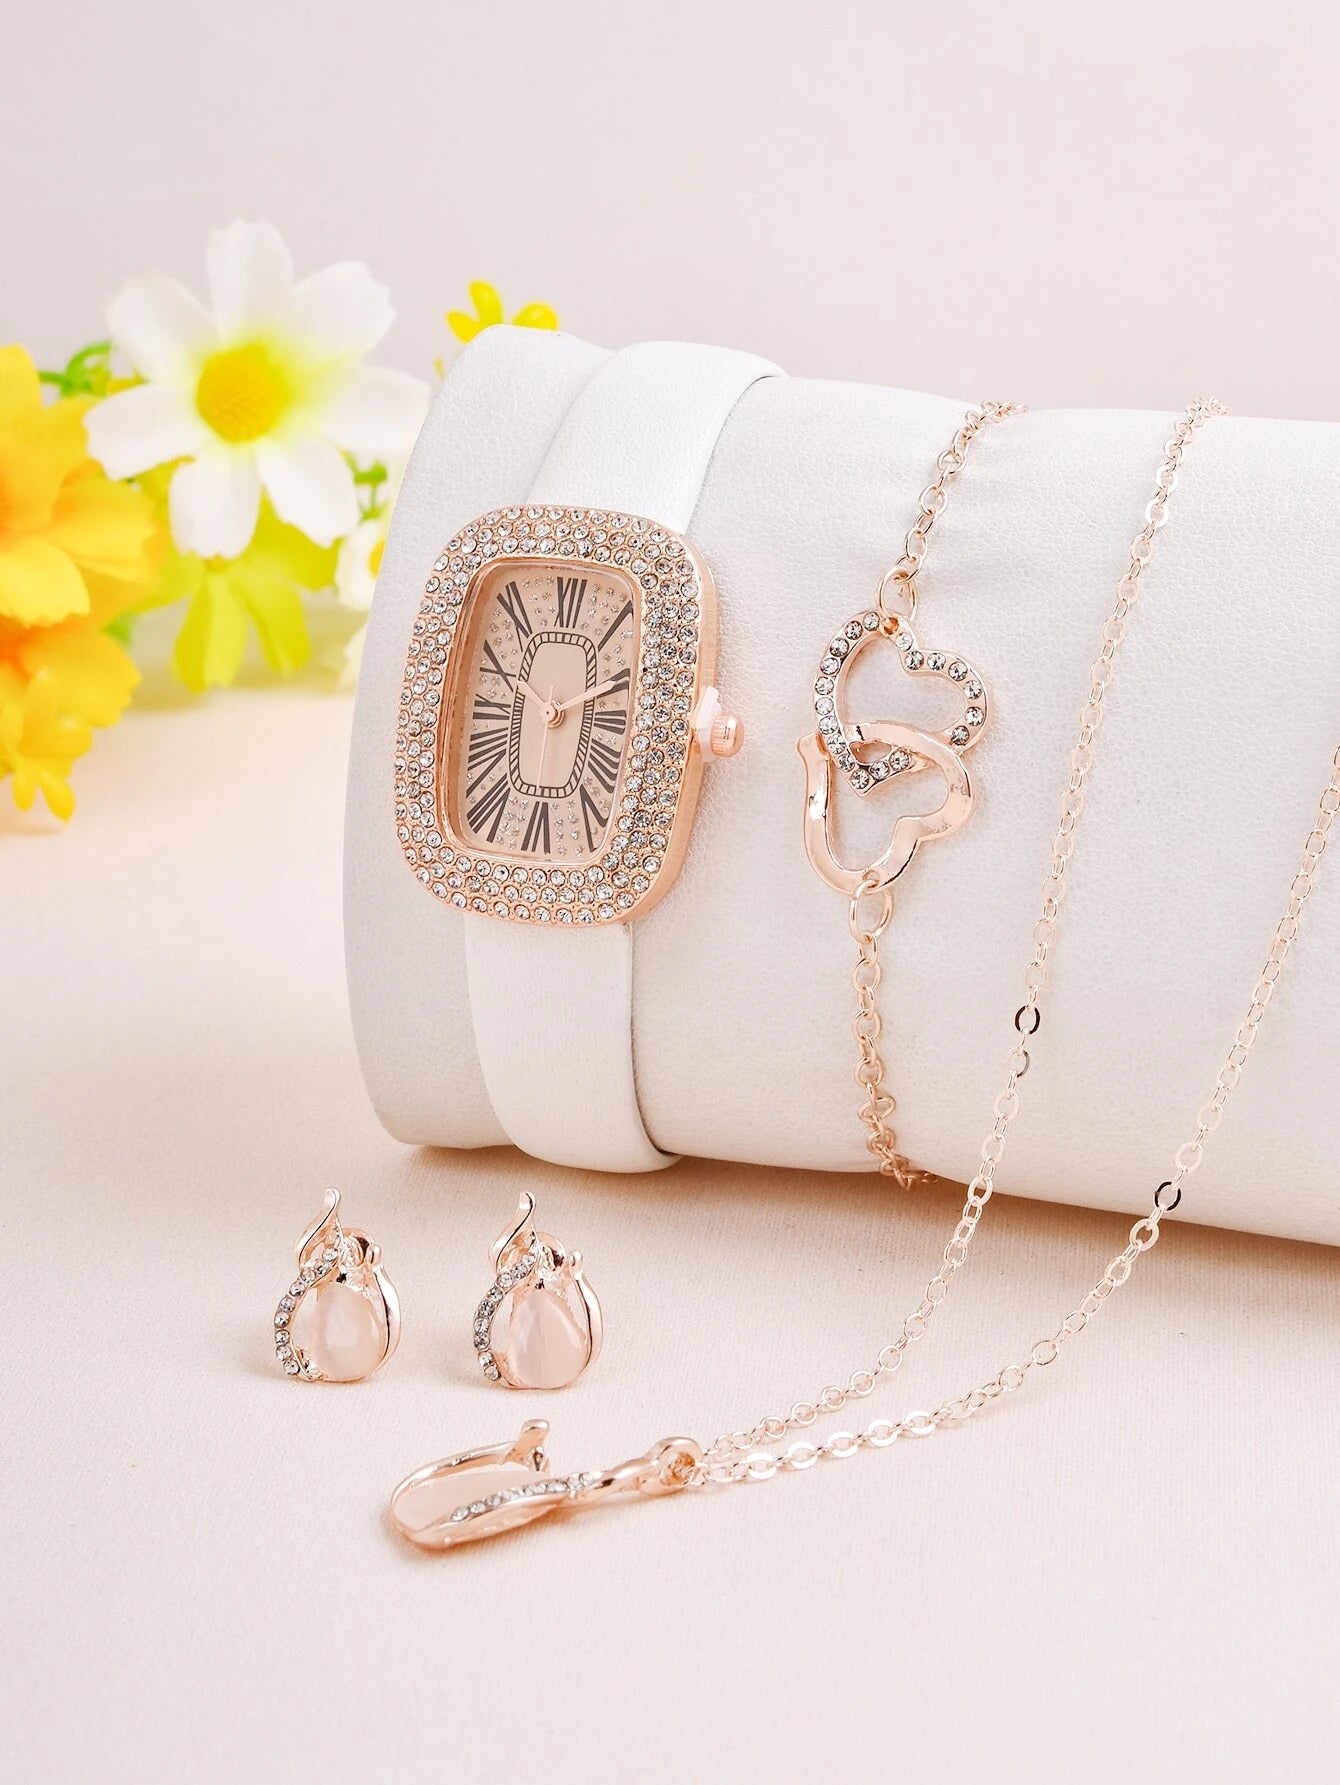 1pc Women White PU Polyurethane Strap Glamorous Rhinestone Decor Square Dial Quartz Watch & 4pcs Jewelry Set, For Daily Life